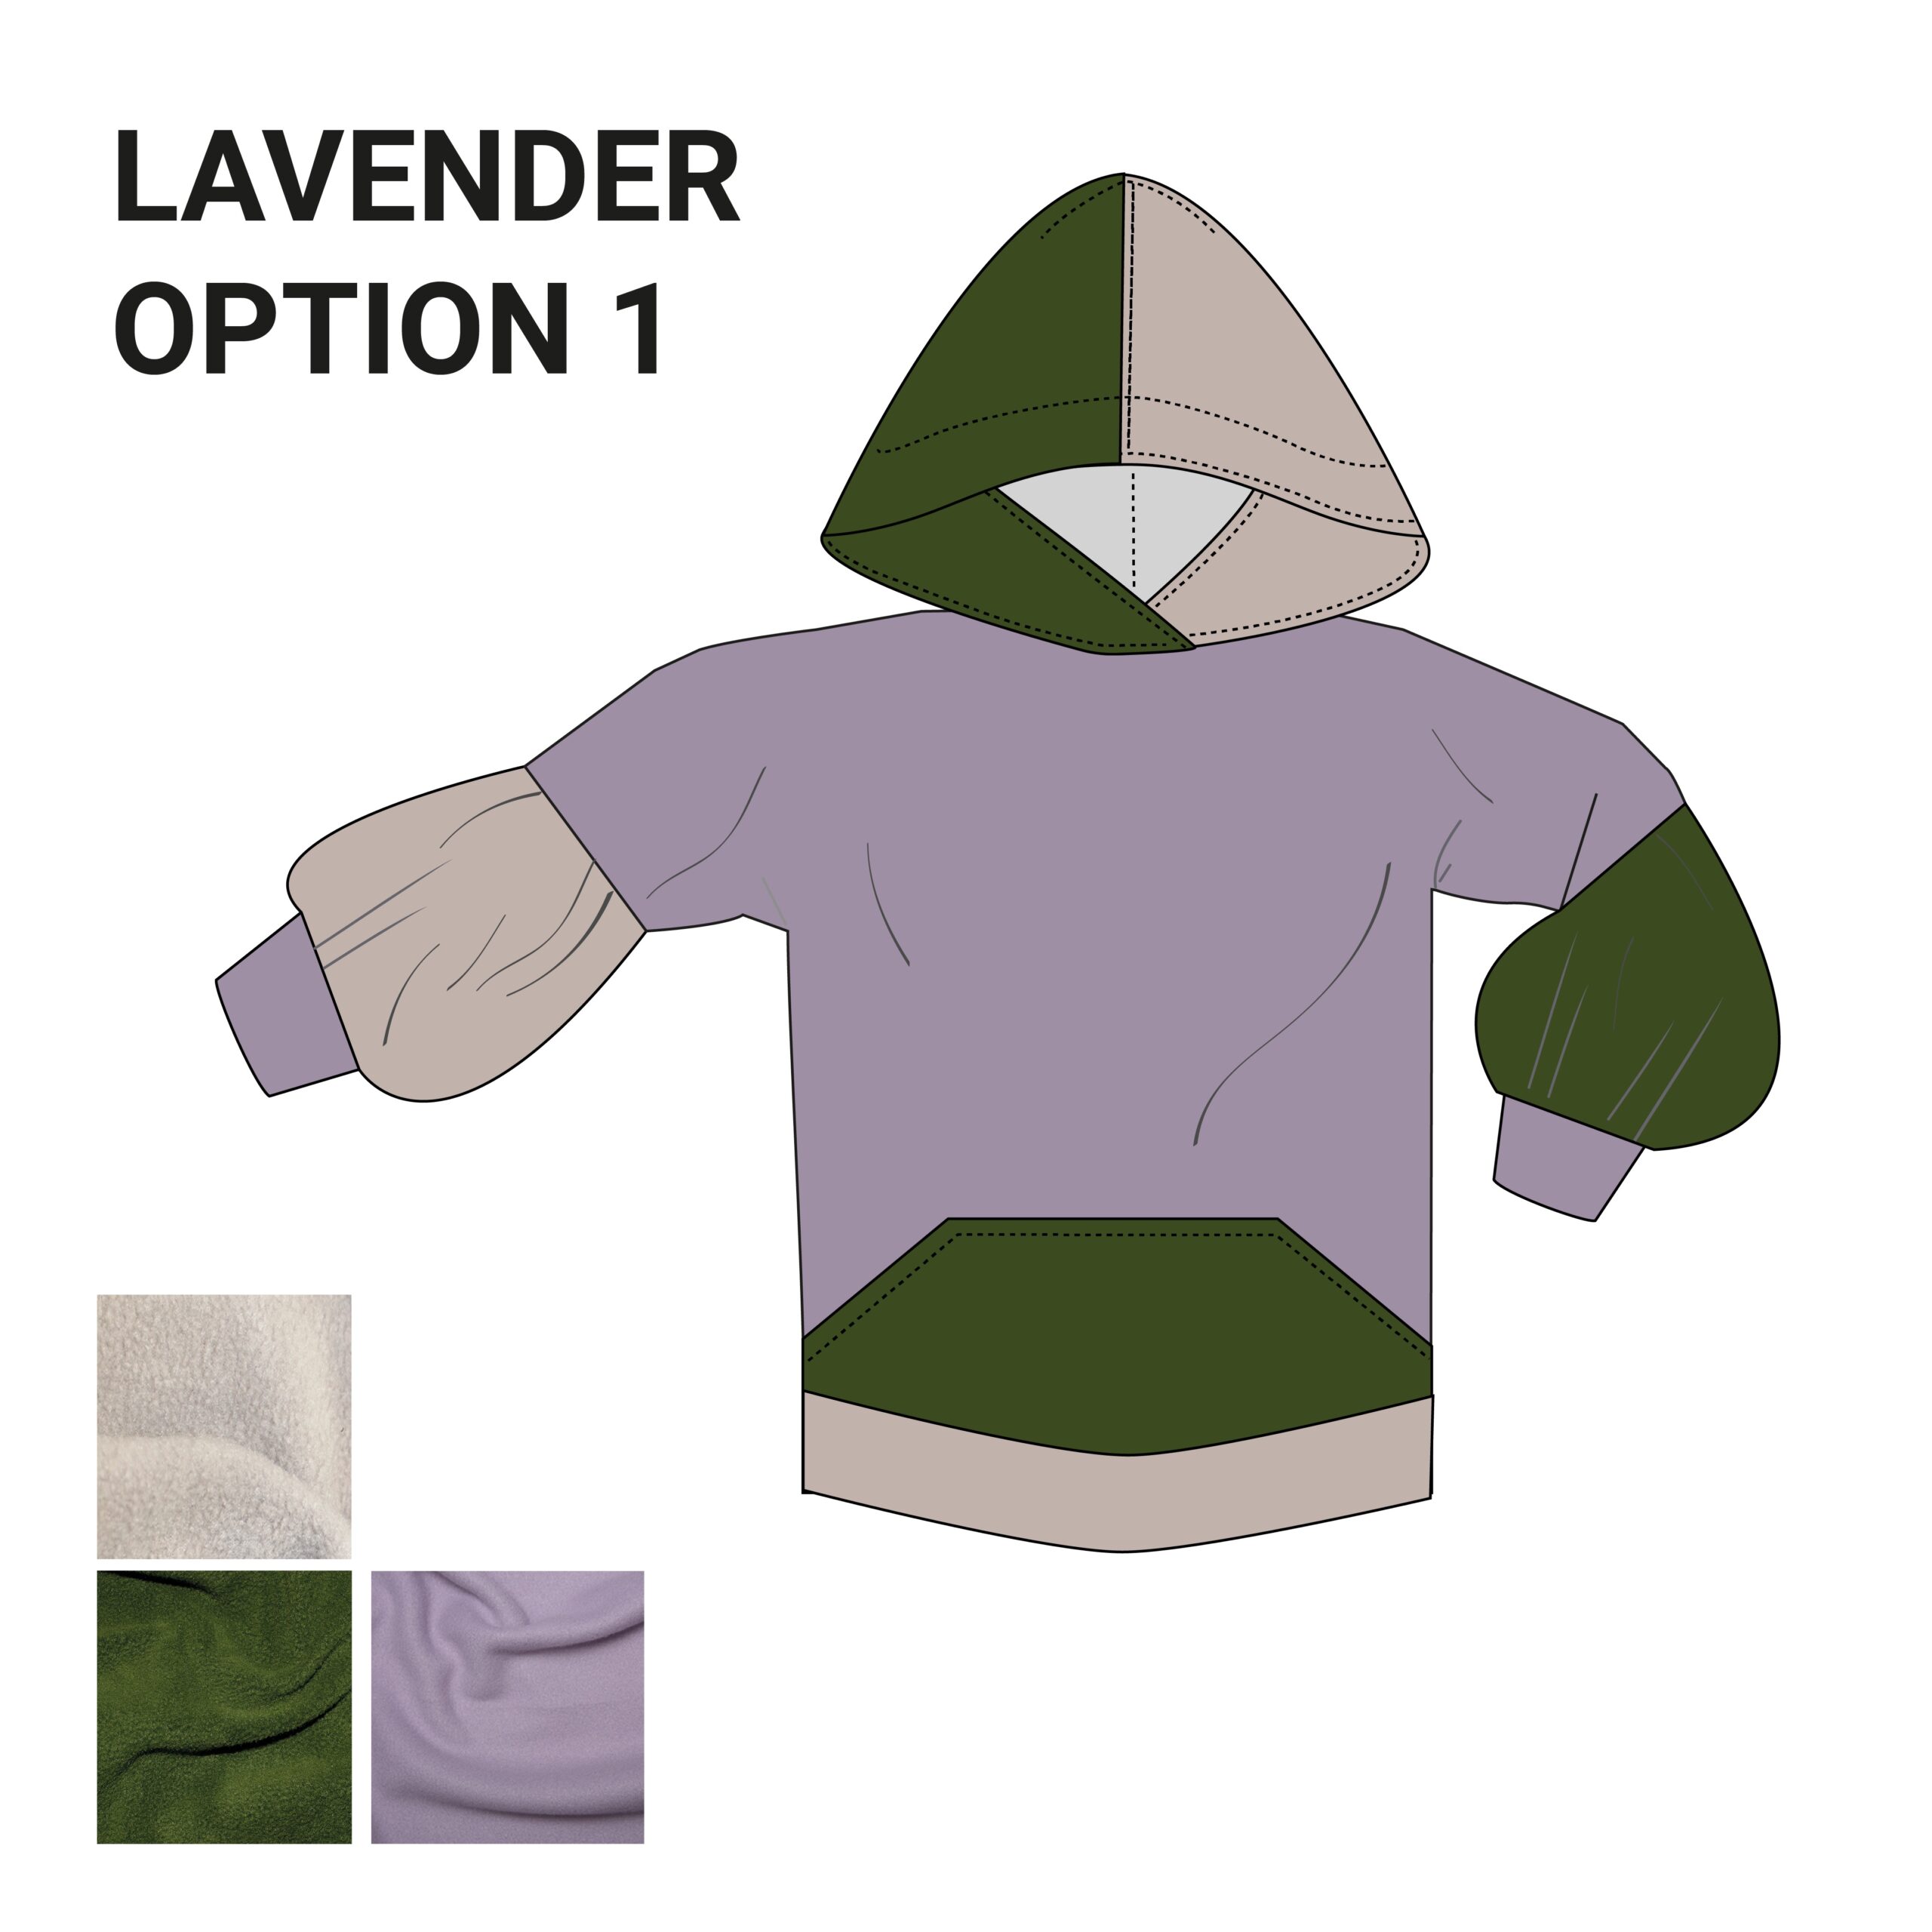 Lavender Balloon Sleeve Hoody - OPTION 1